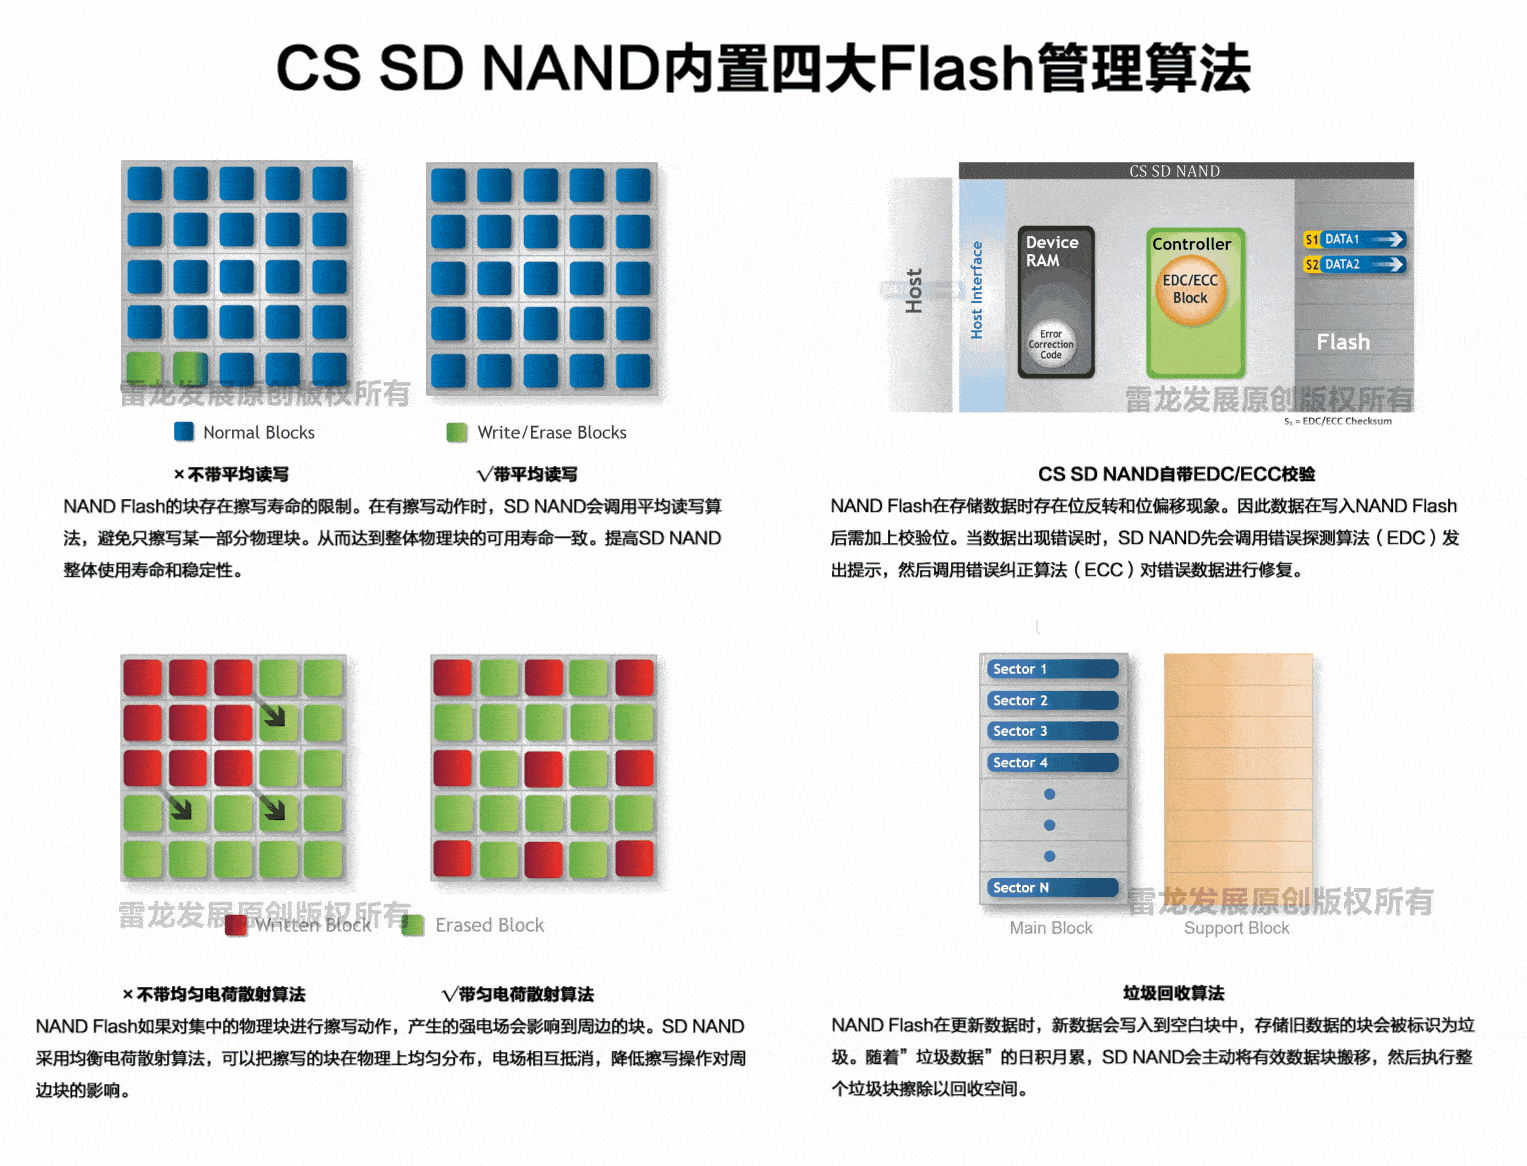 CS SD NAND内置四大Flash管理算法